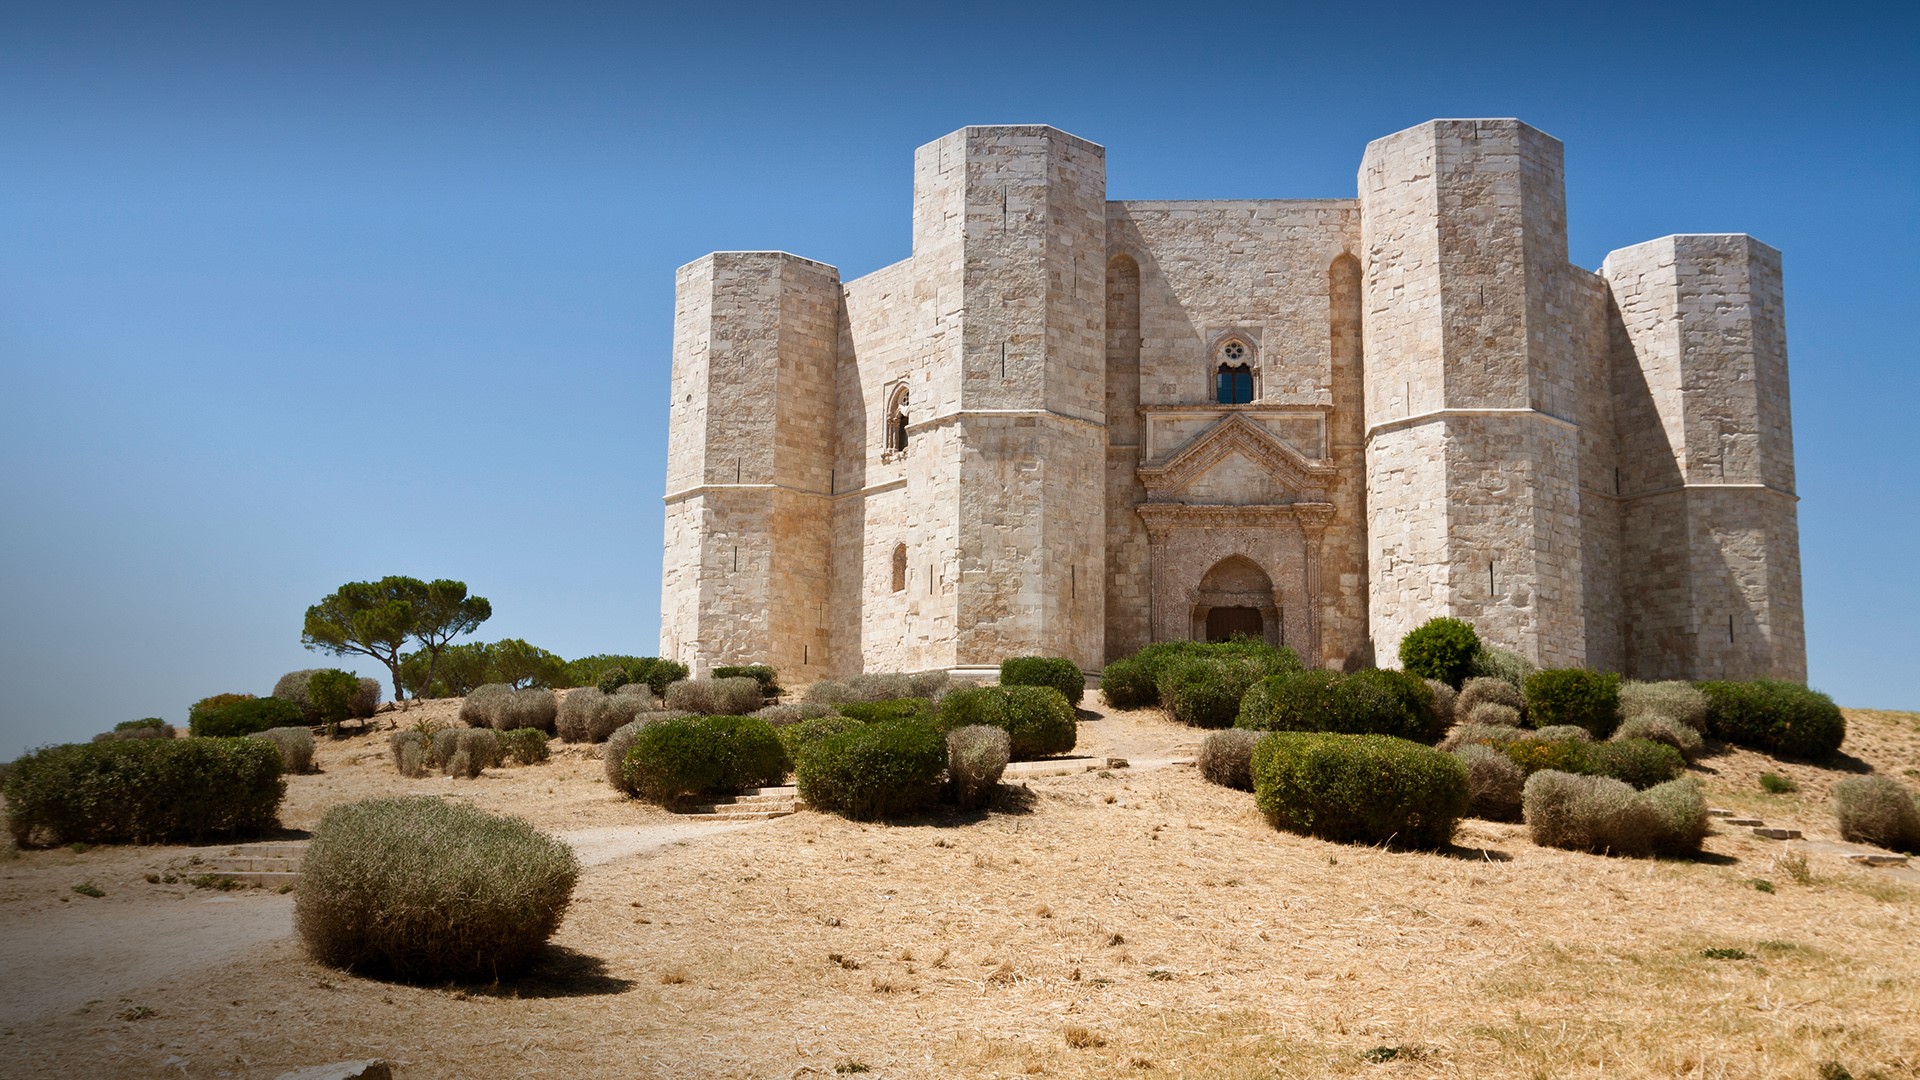 Castel Del Monte Medieval Citadel And Castle In Andria Apulia Italy Windows 10 Spotlight Images